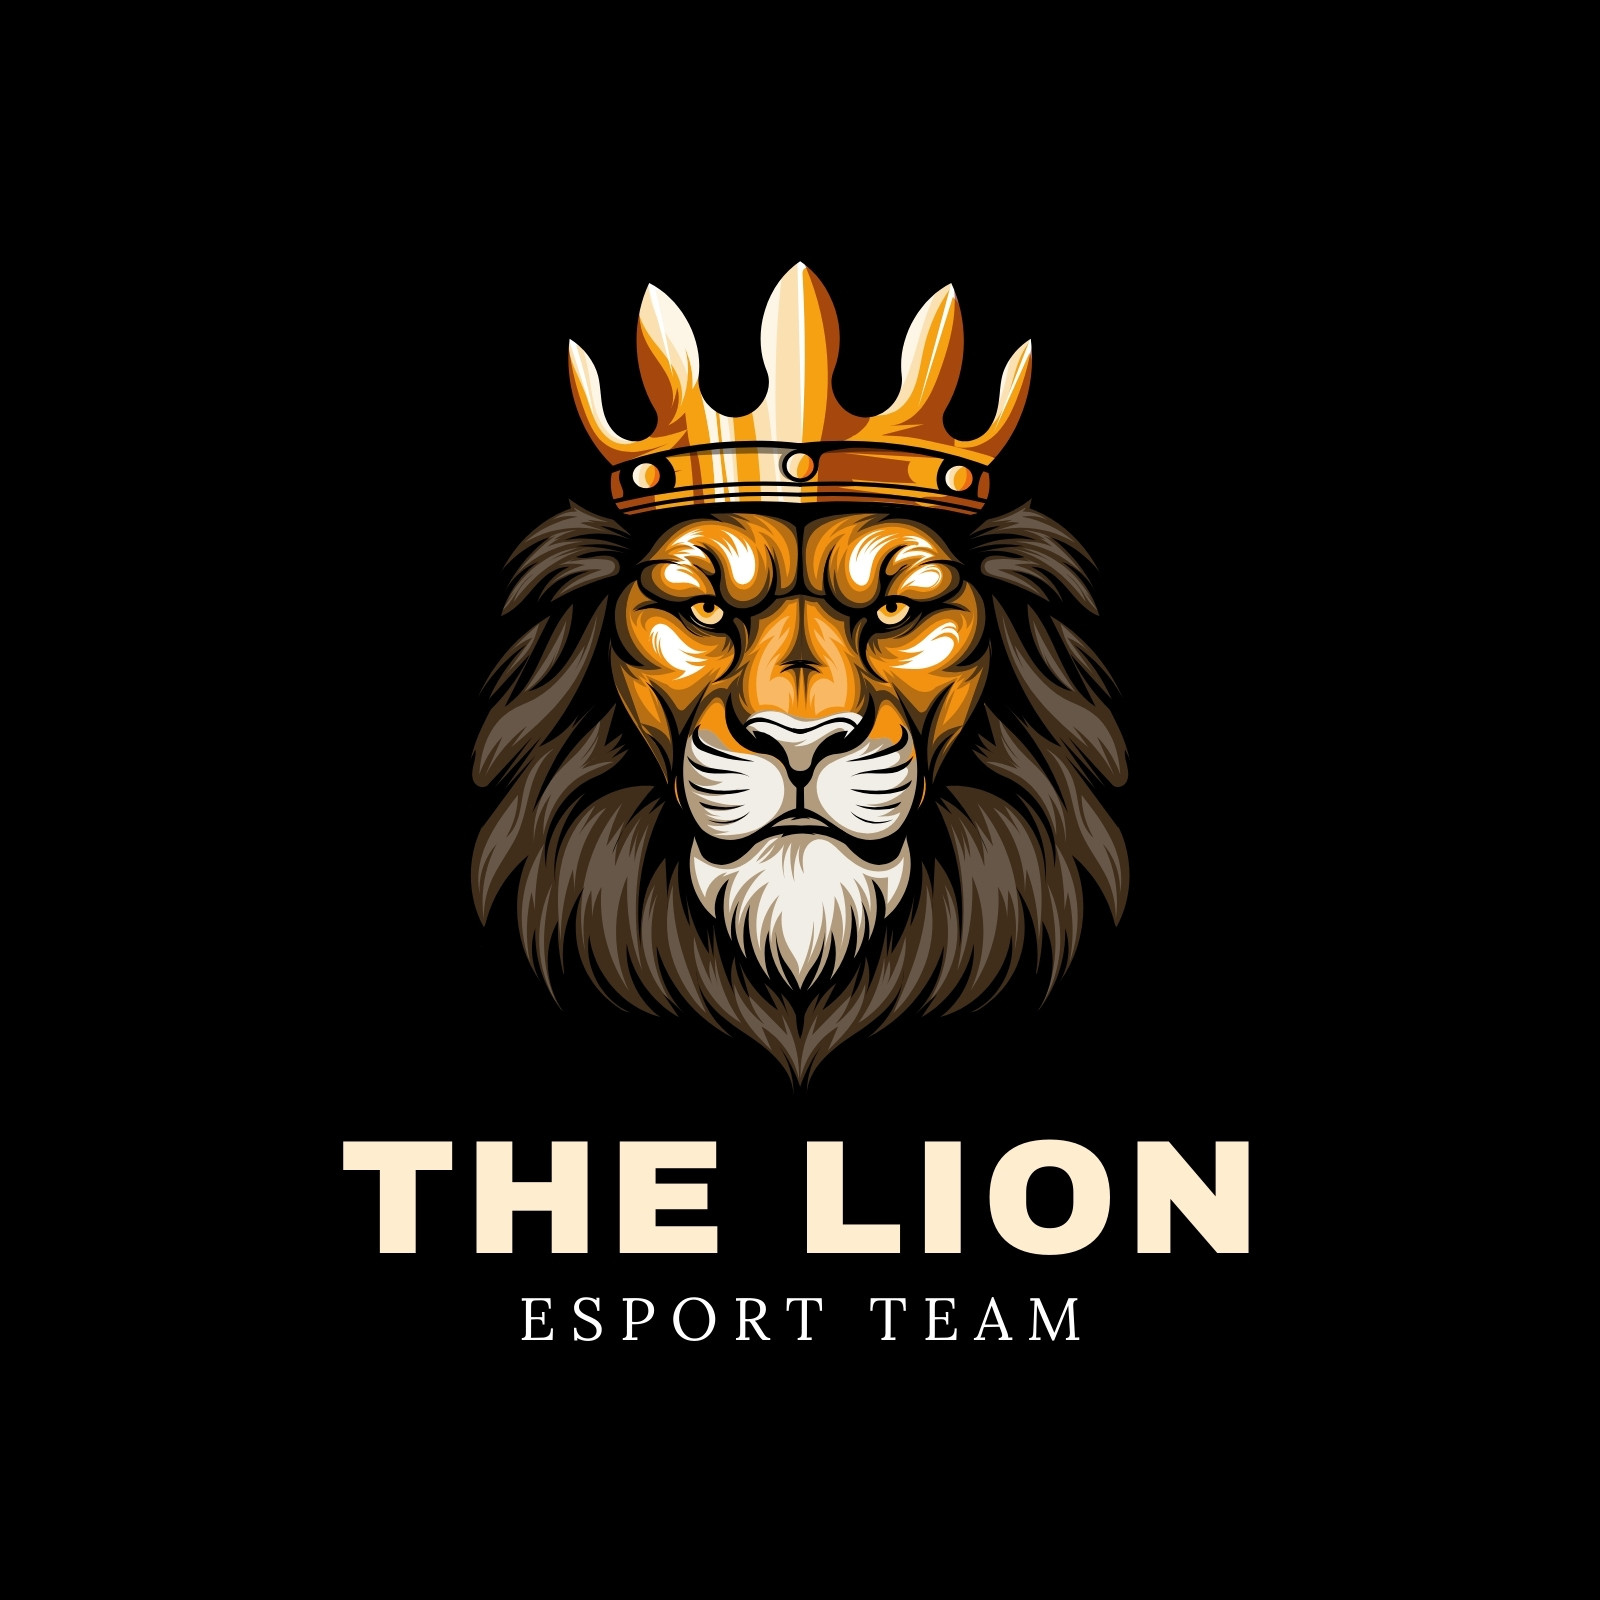 Lion king logo icon design Royalty Free Vector Image